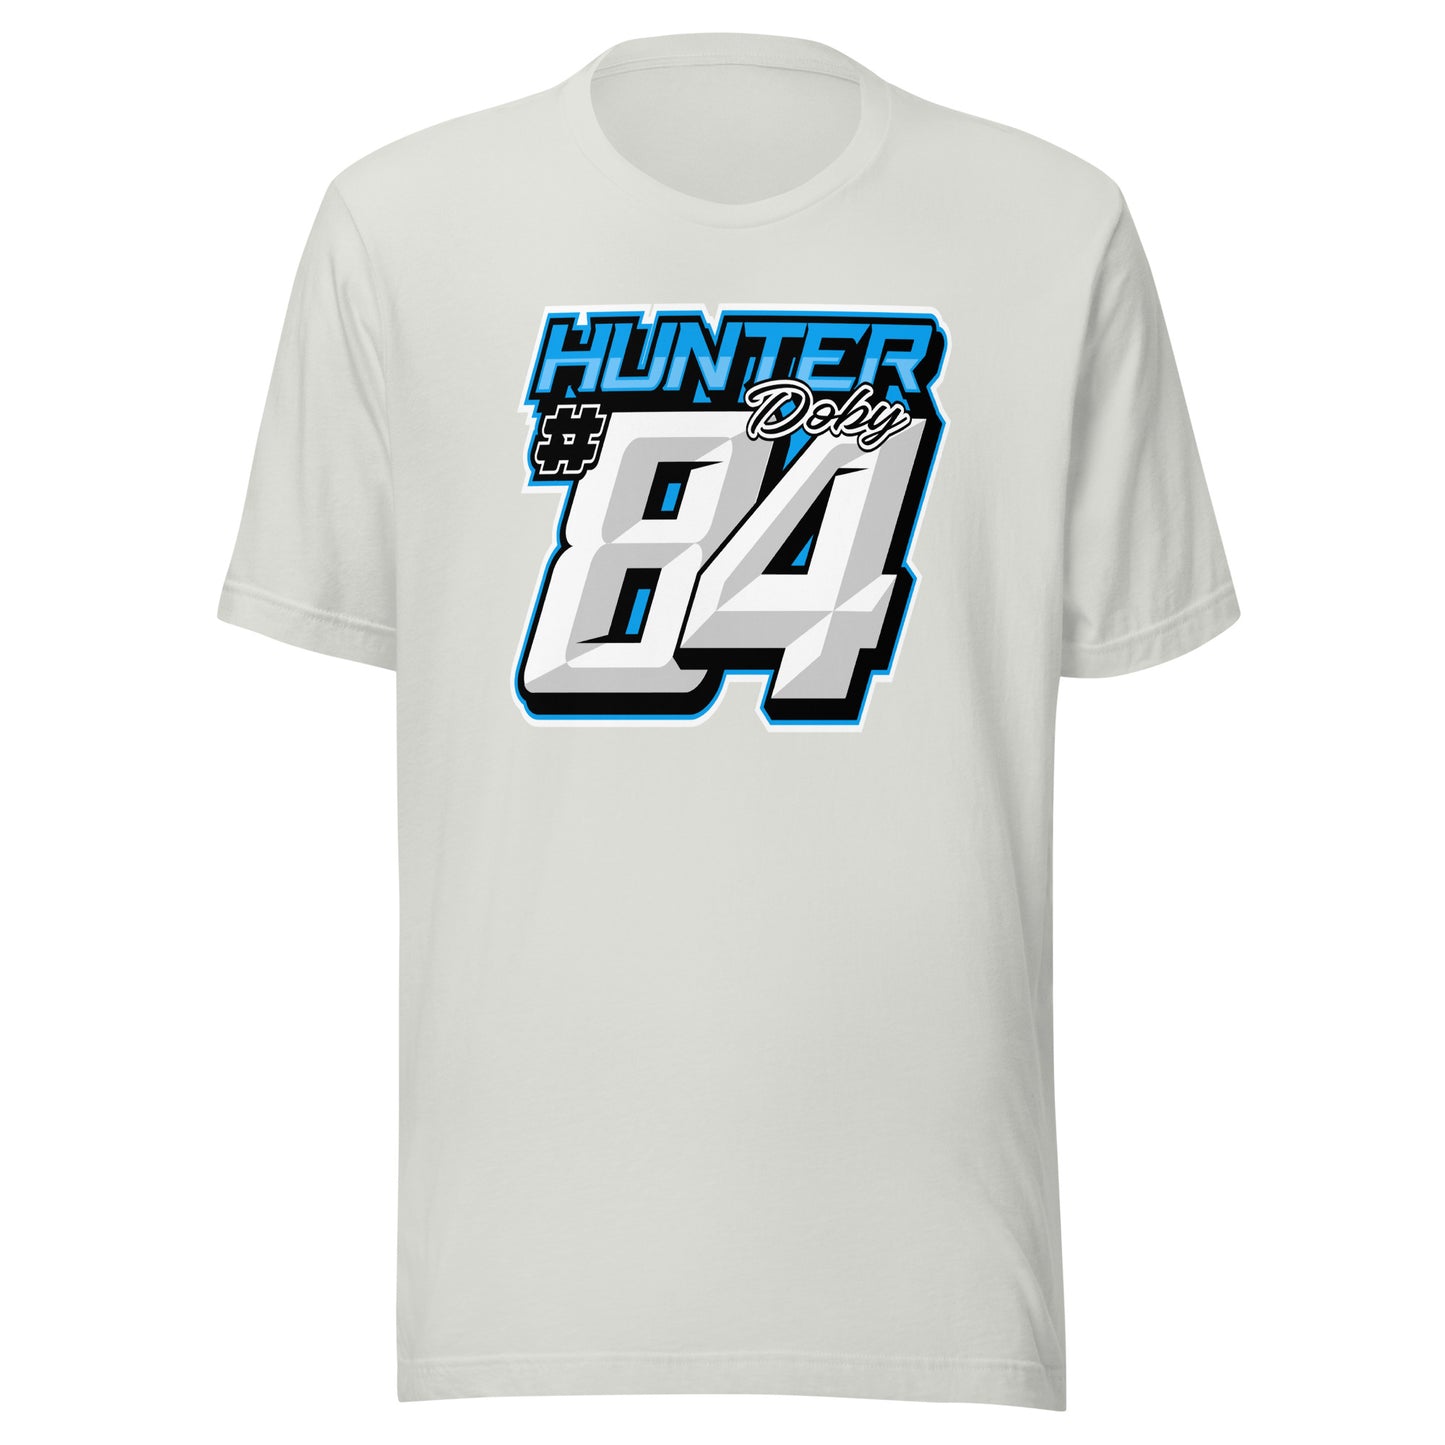 Hunter Doby 84 Unisex T-shirt